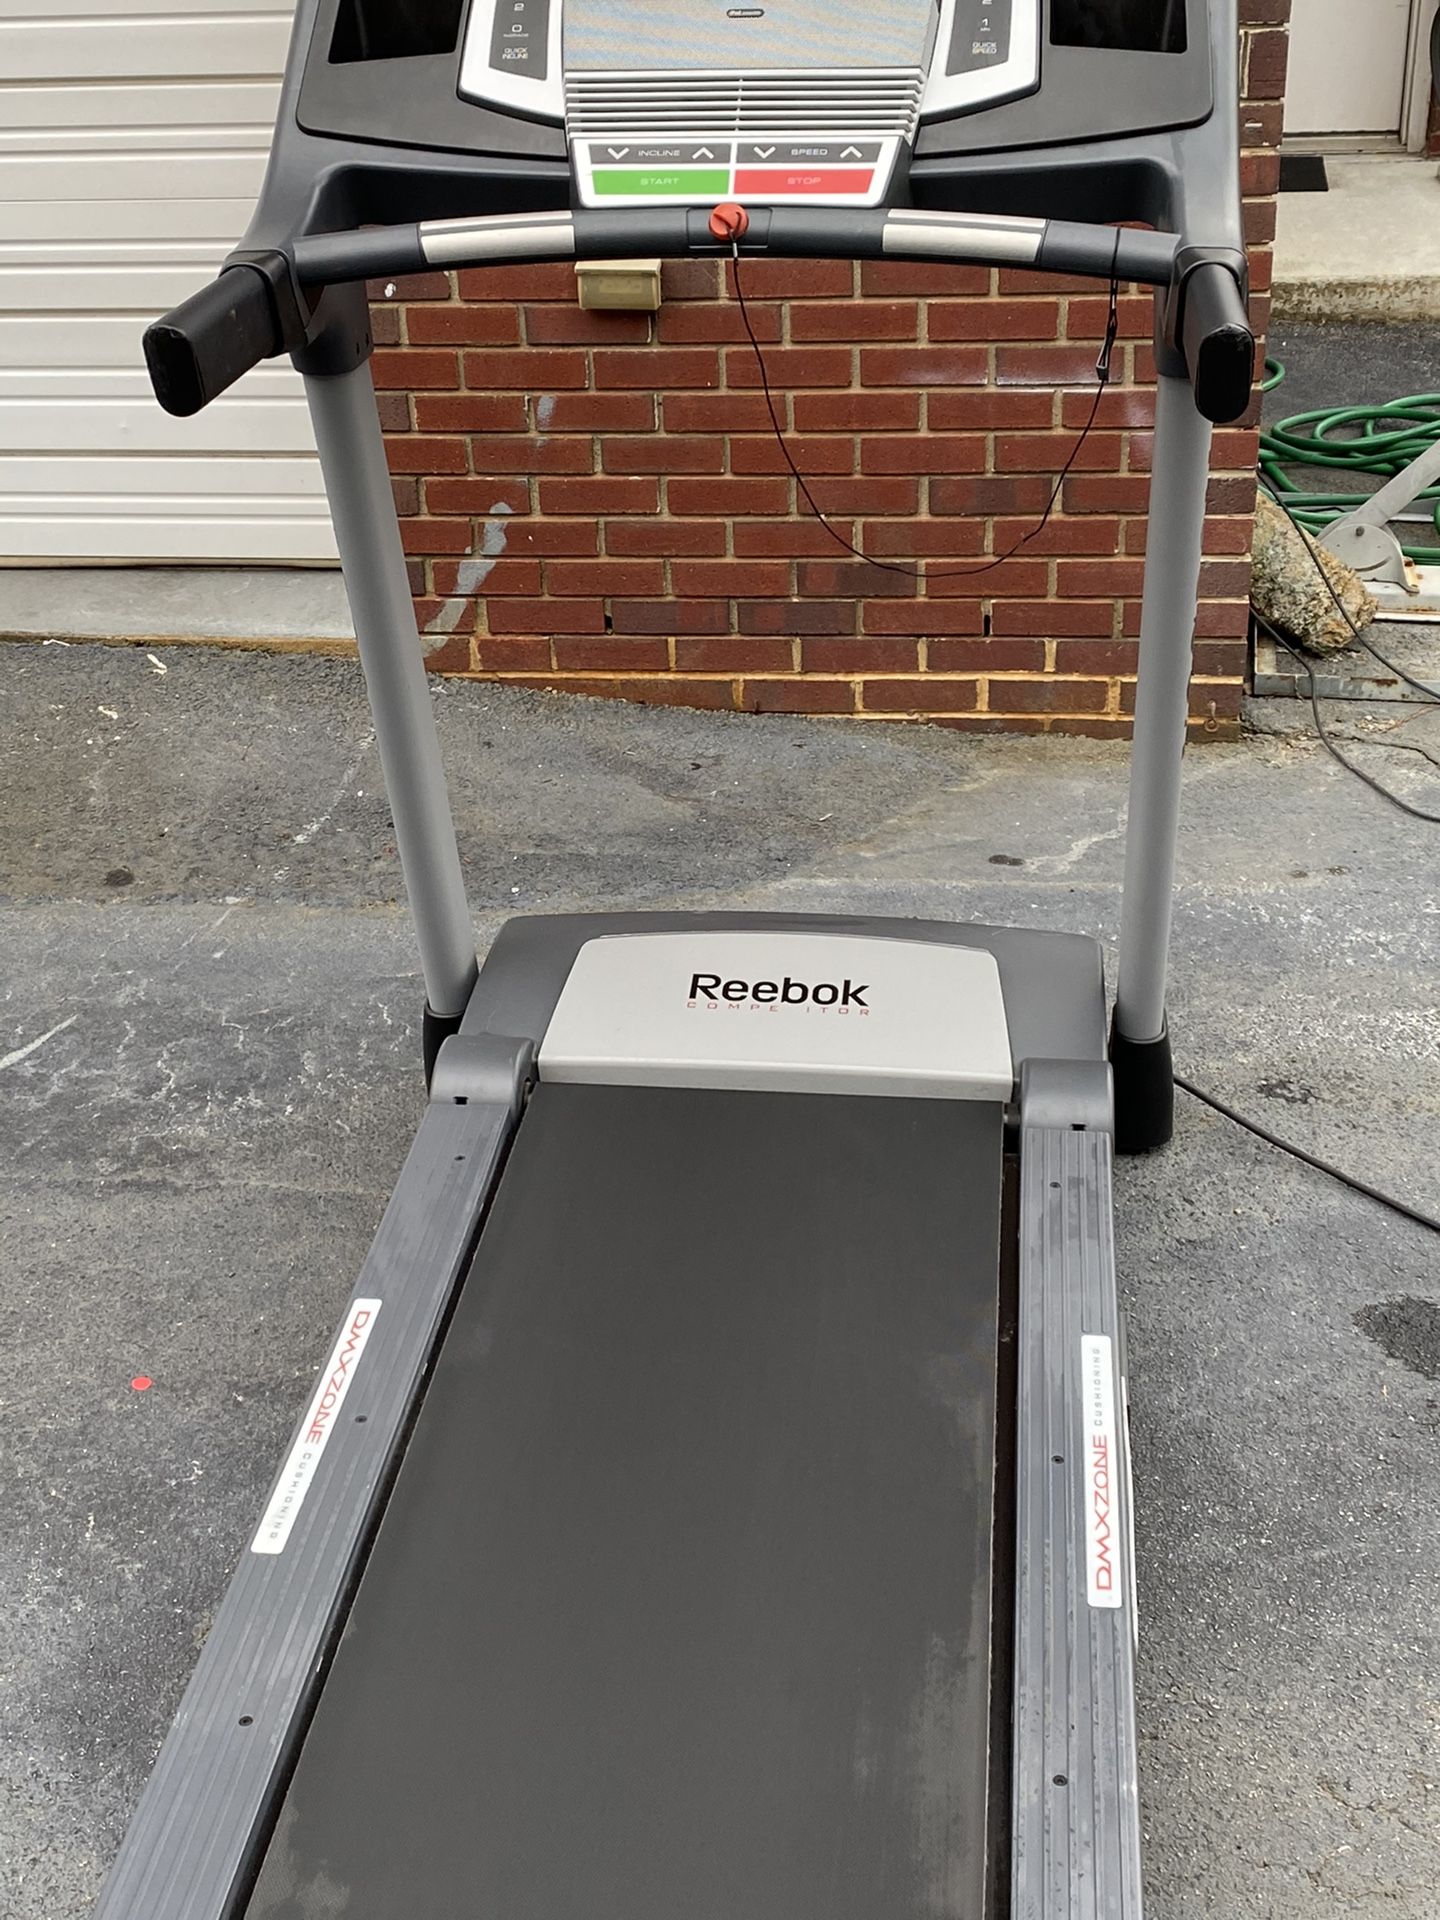 Reebok Competitor RT 5.1 Treadmill